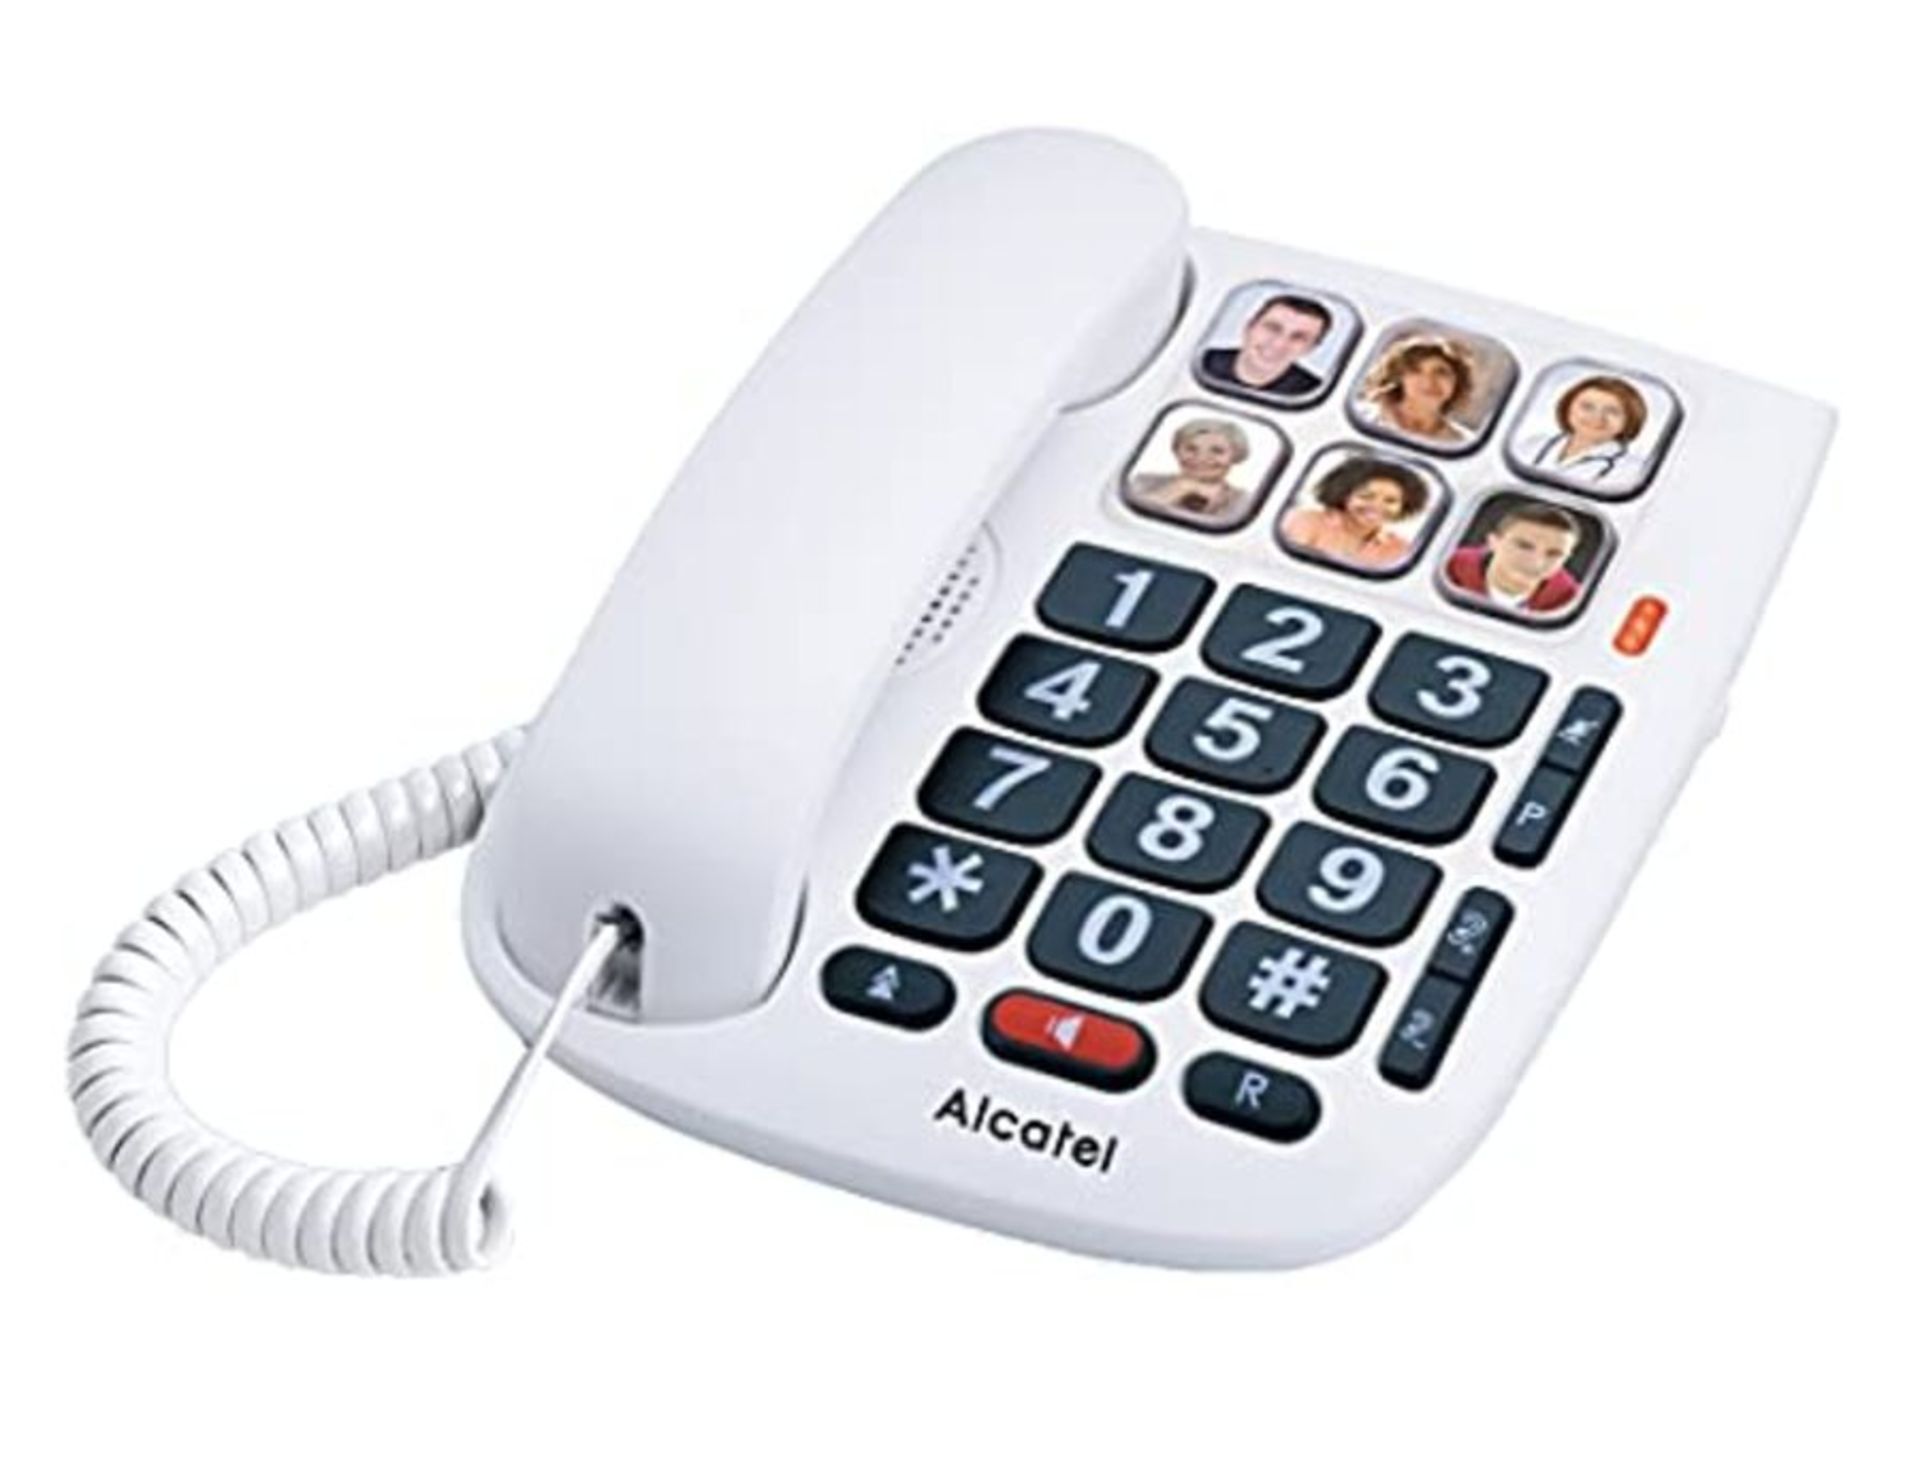 Alcatel Max 10?Corded Phone for Seniors White.